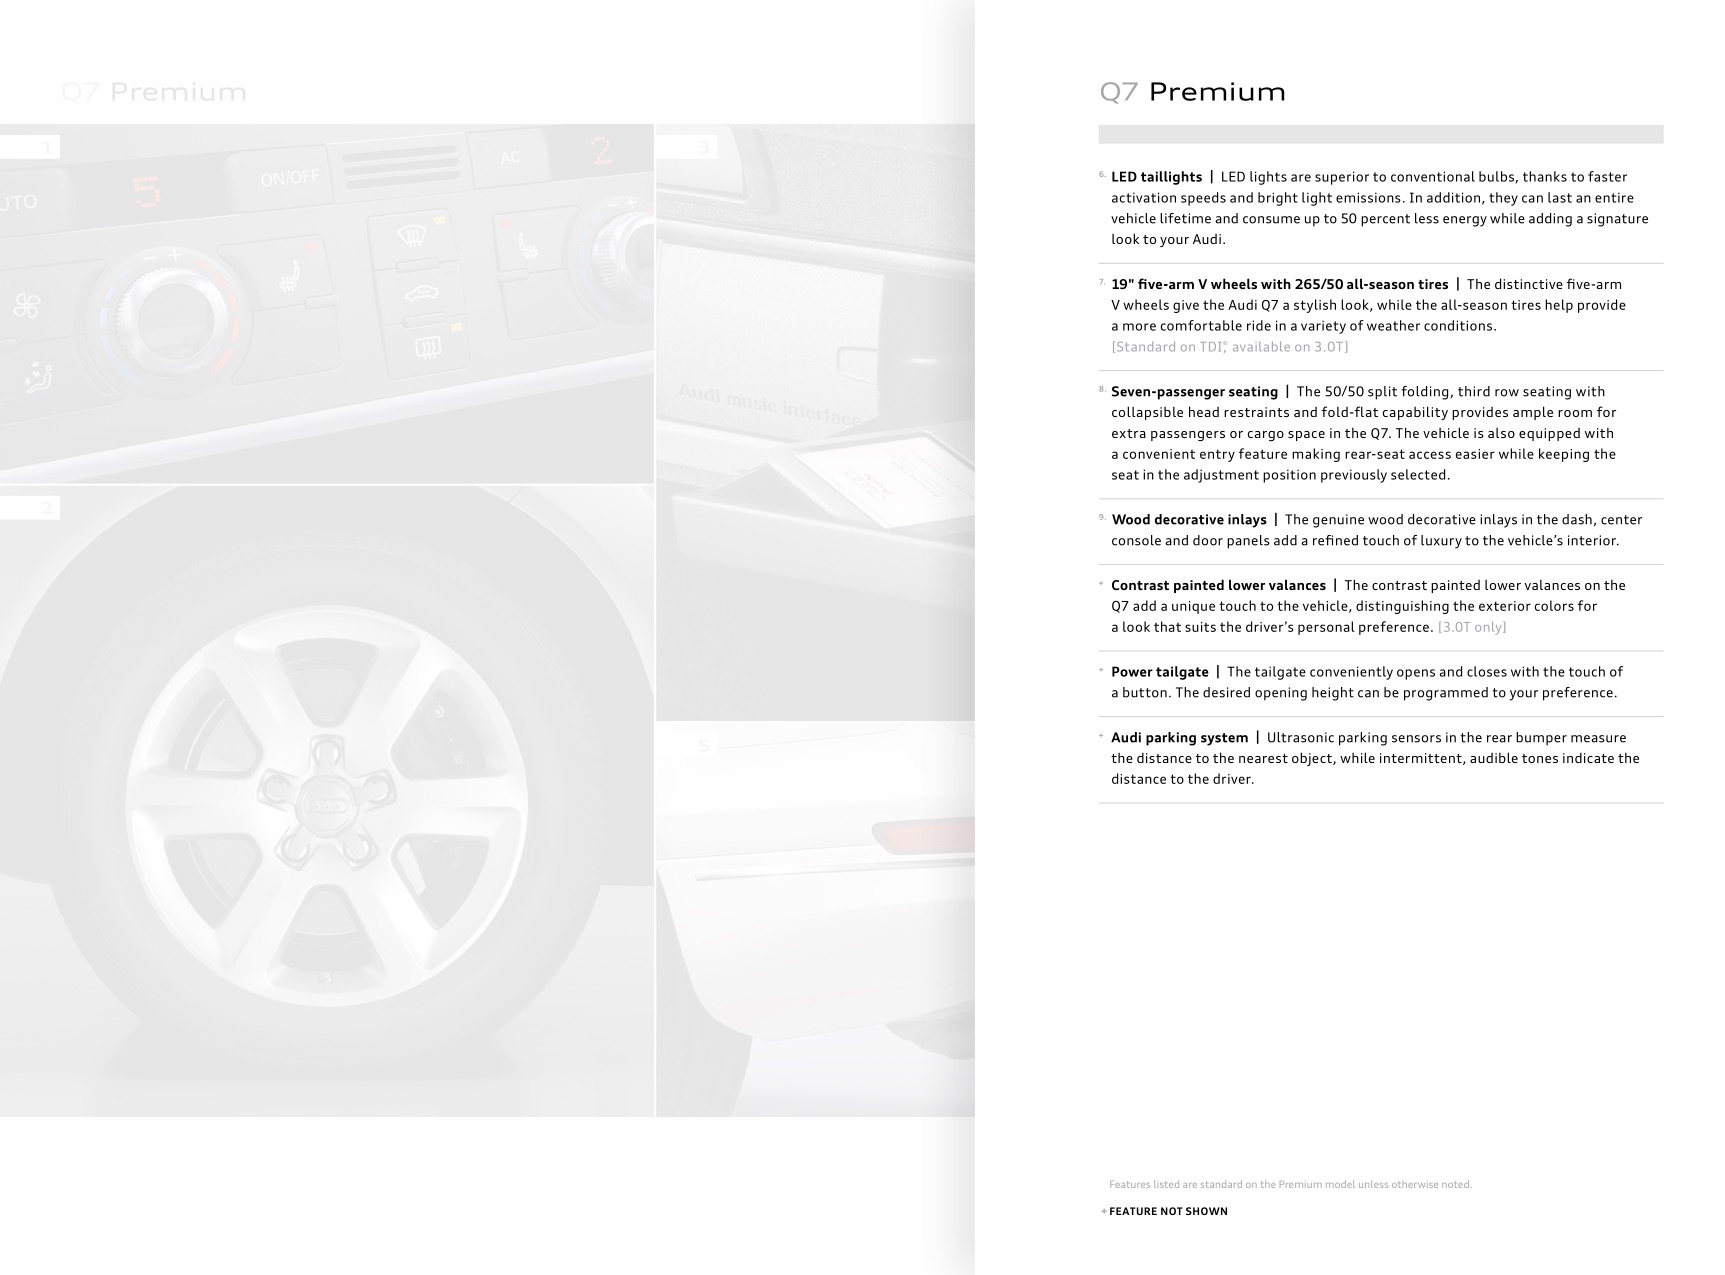 2011 Audi Q7 Brochure Page 9